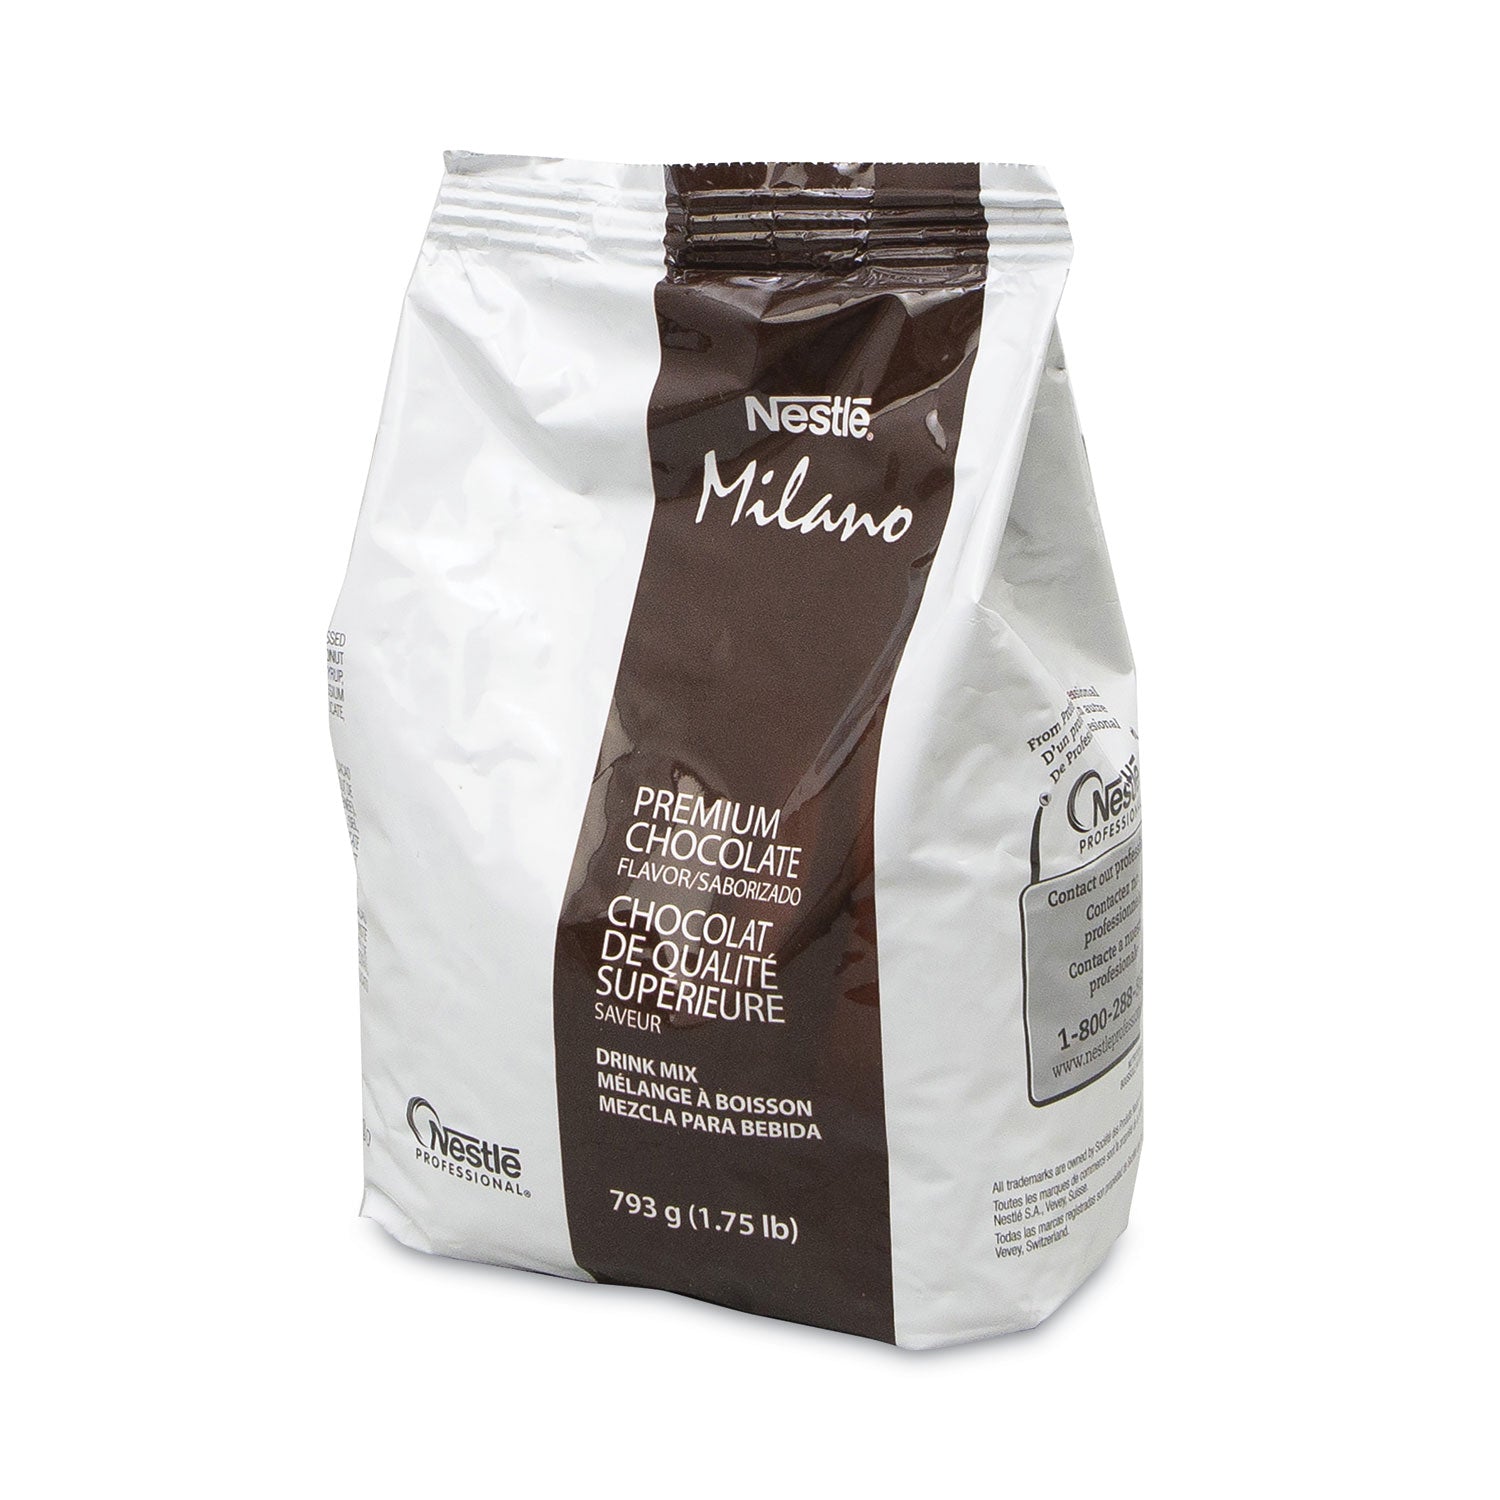 milano-premium-chocolate-hot-cocoa-mix-28-oz-packet-4-carton_nes416818 - 1